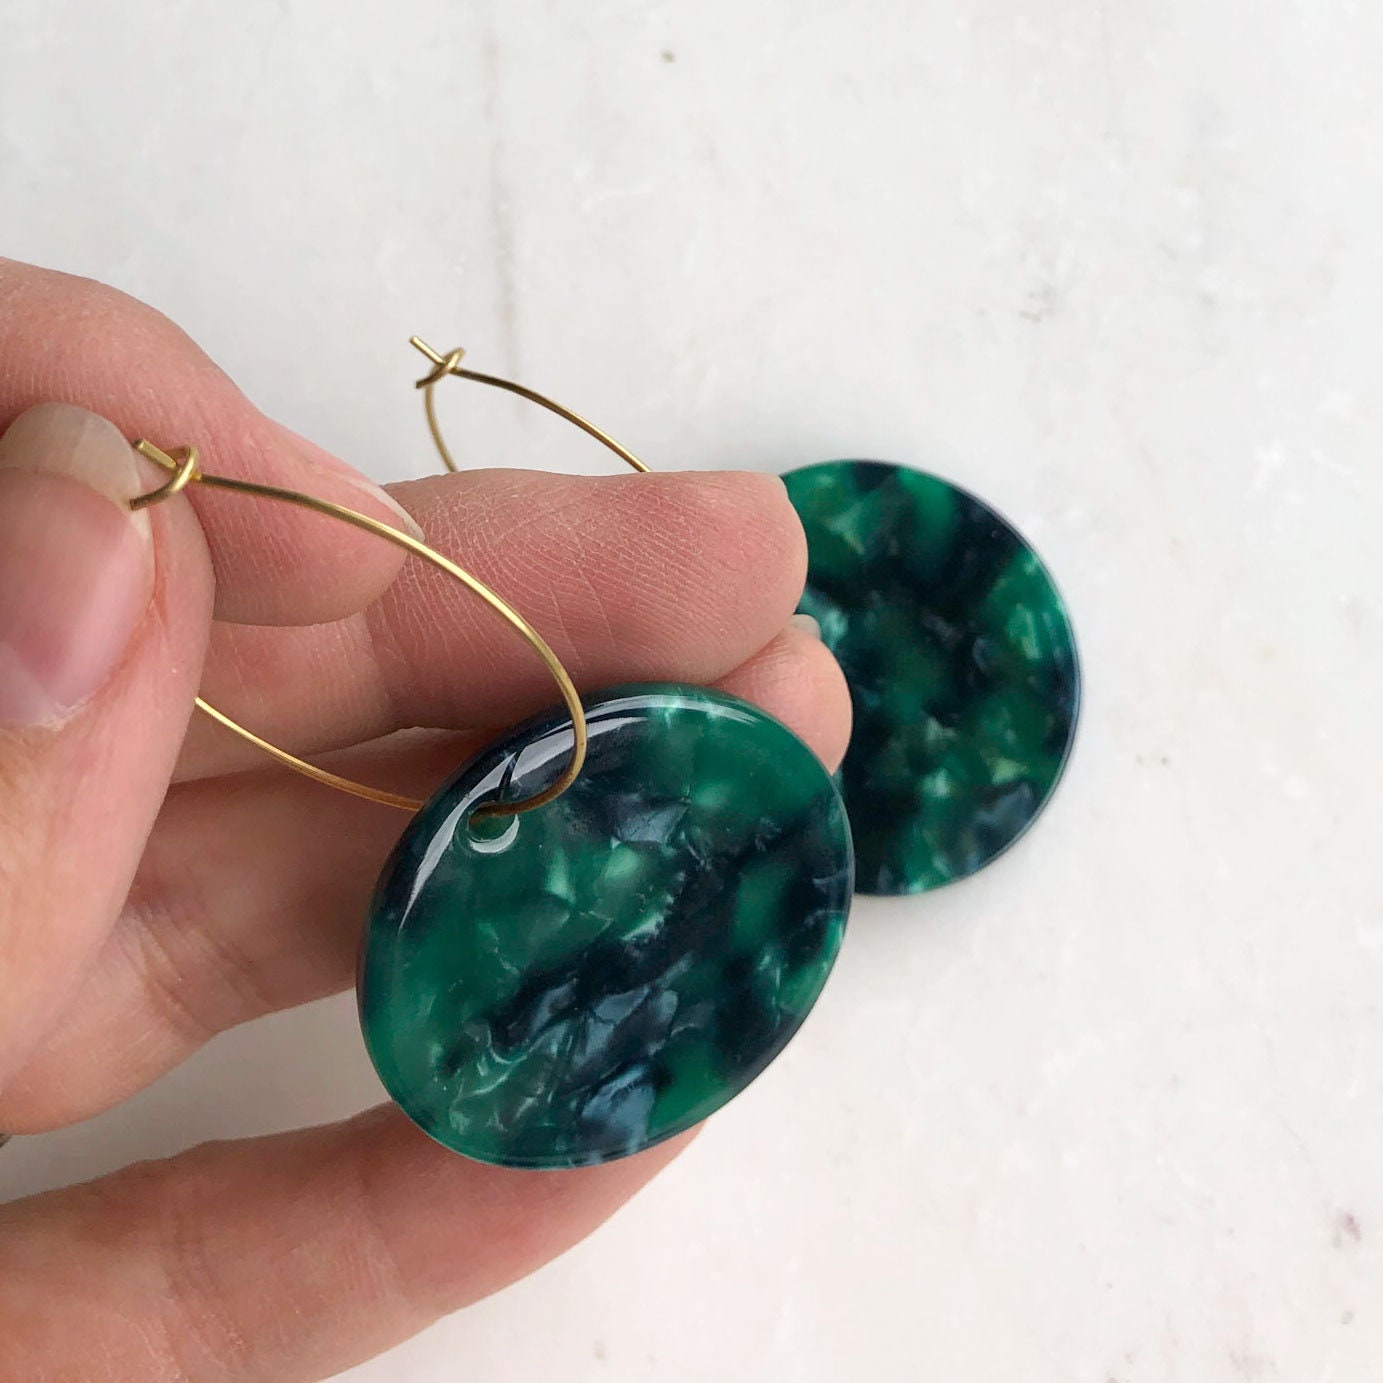 Emerald green statement earrings, Christmas party earrings, round green earrings with gold hoops